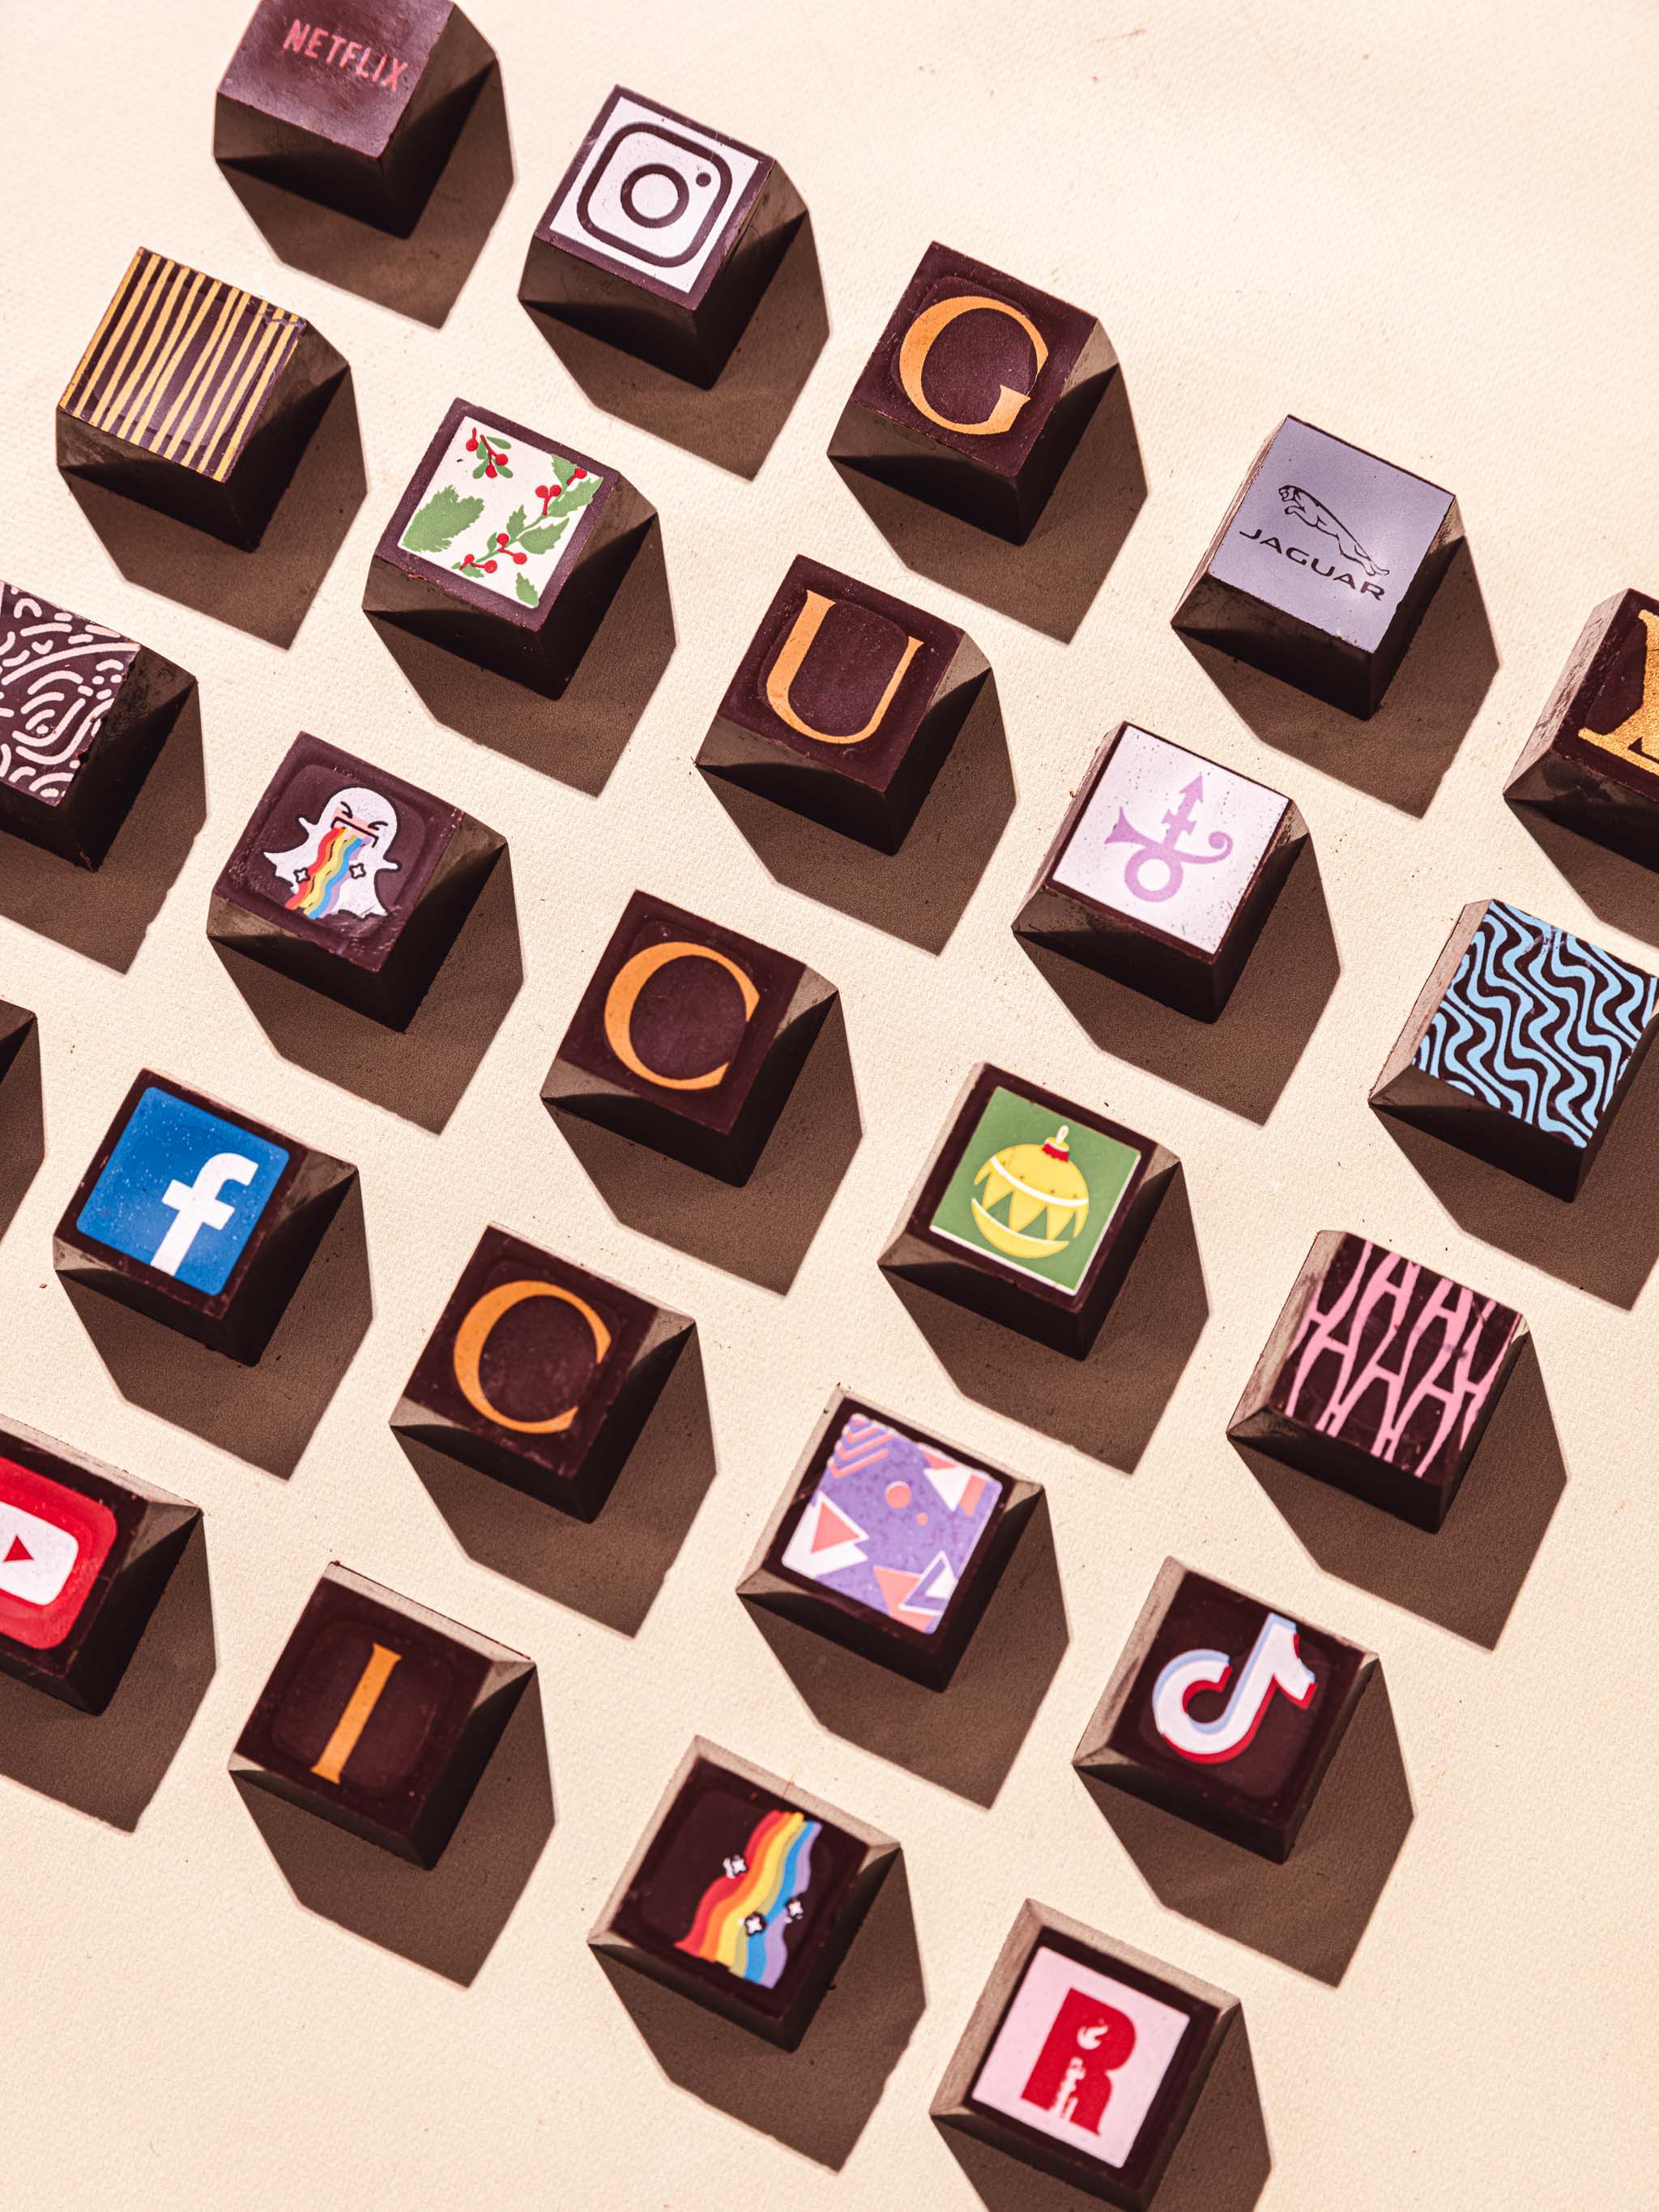 Compartes custom chocolate truffles with logos